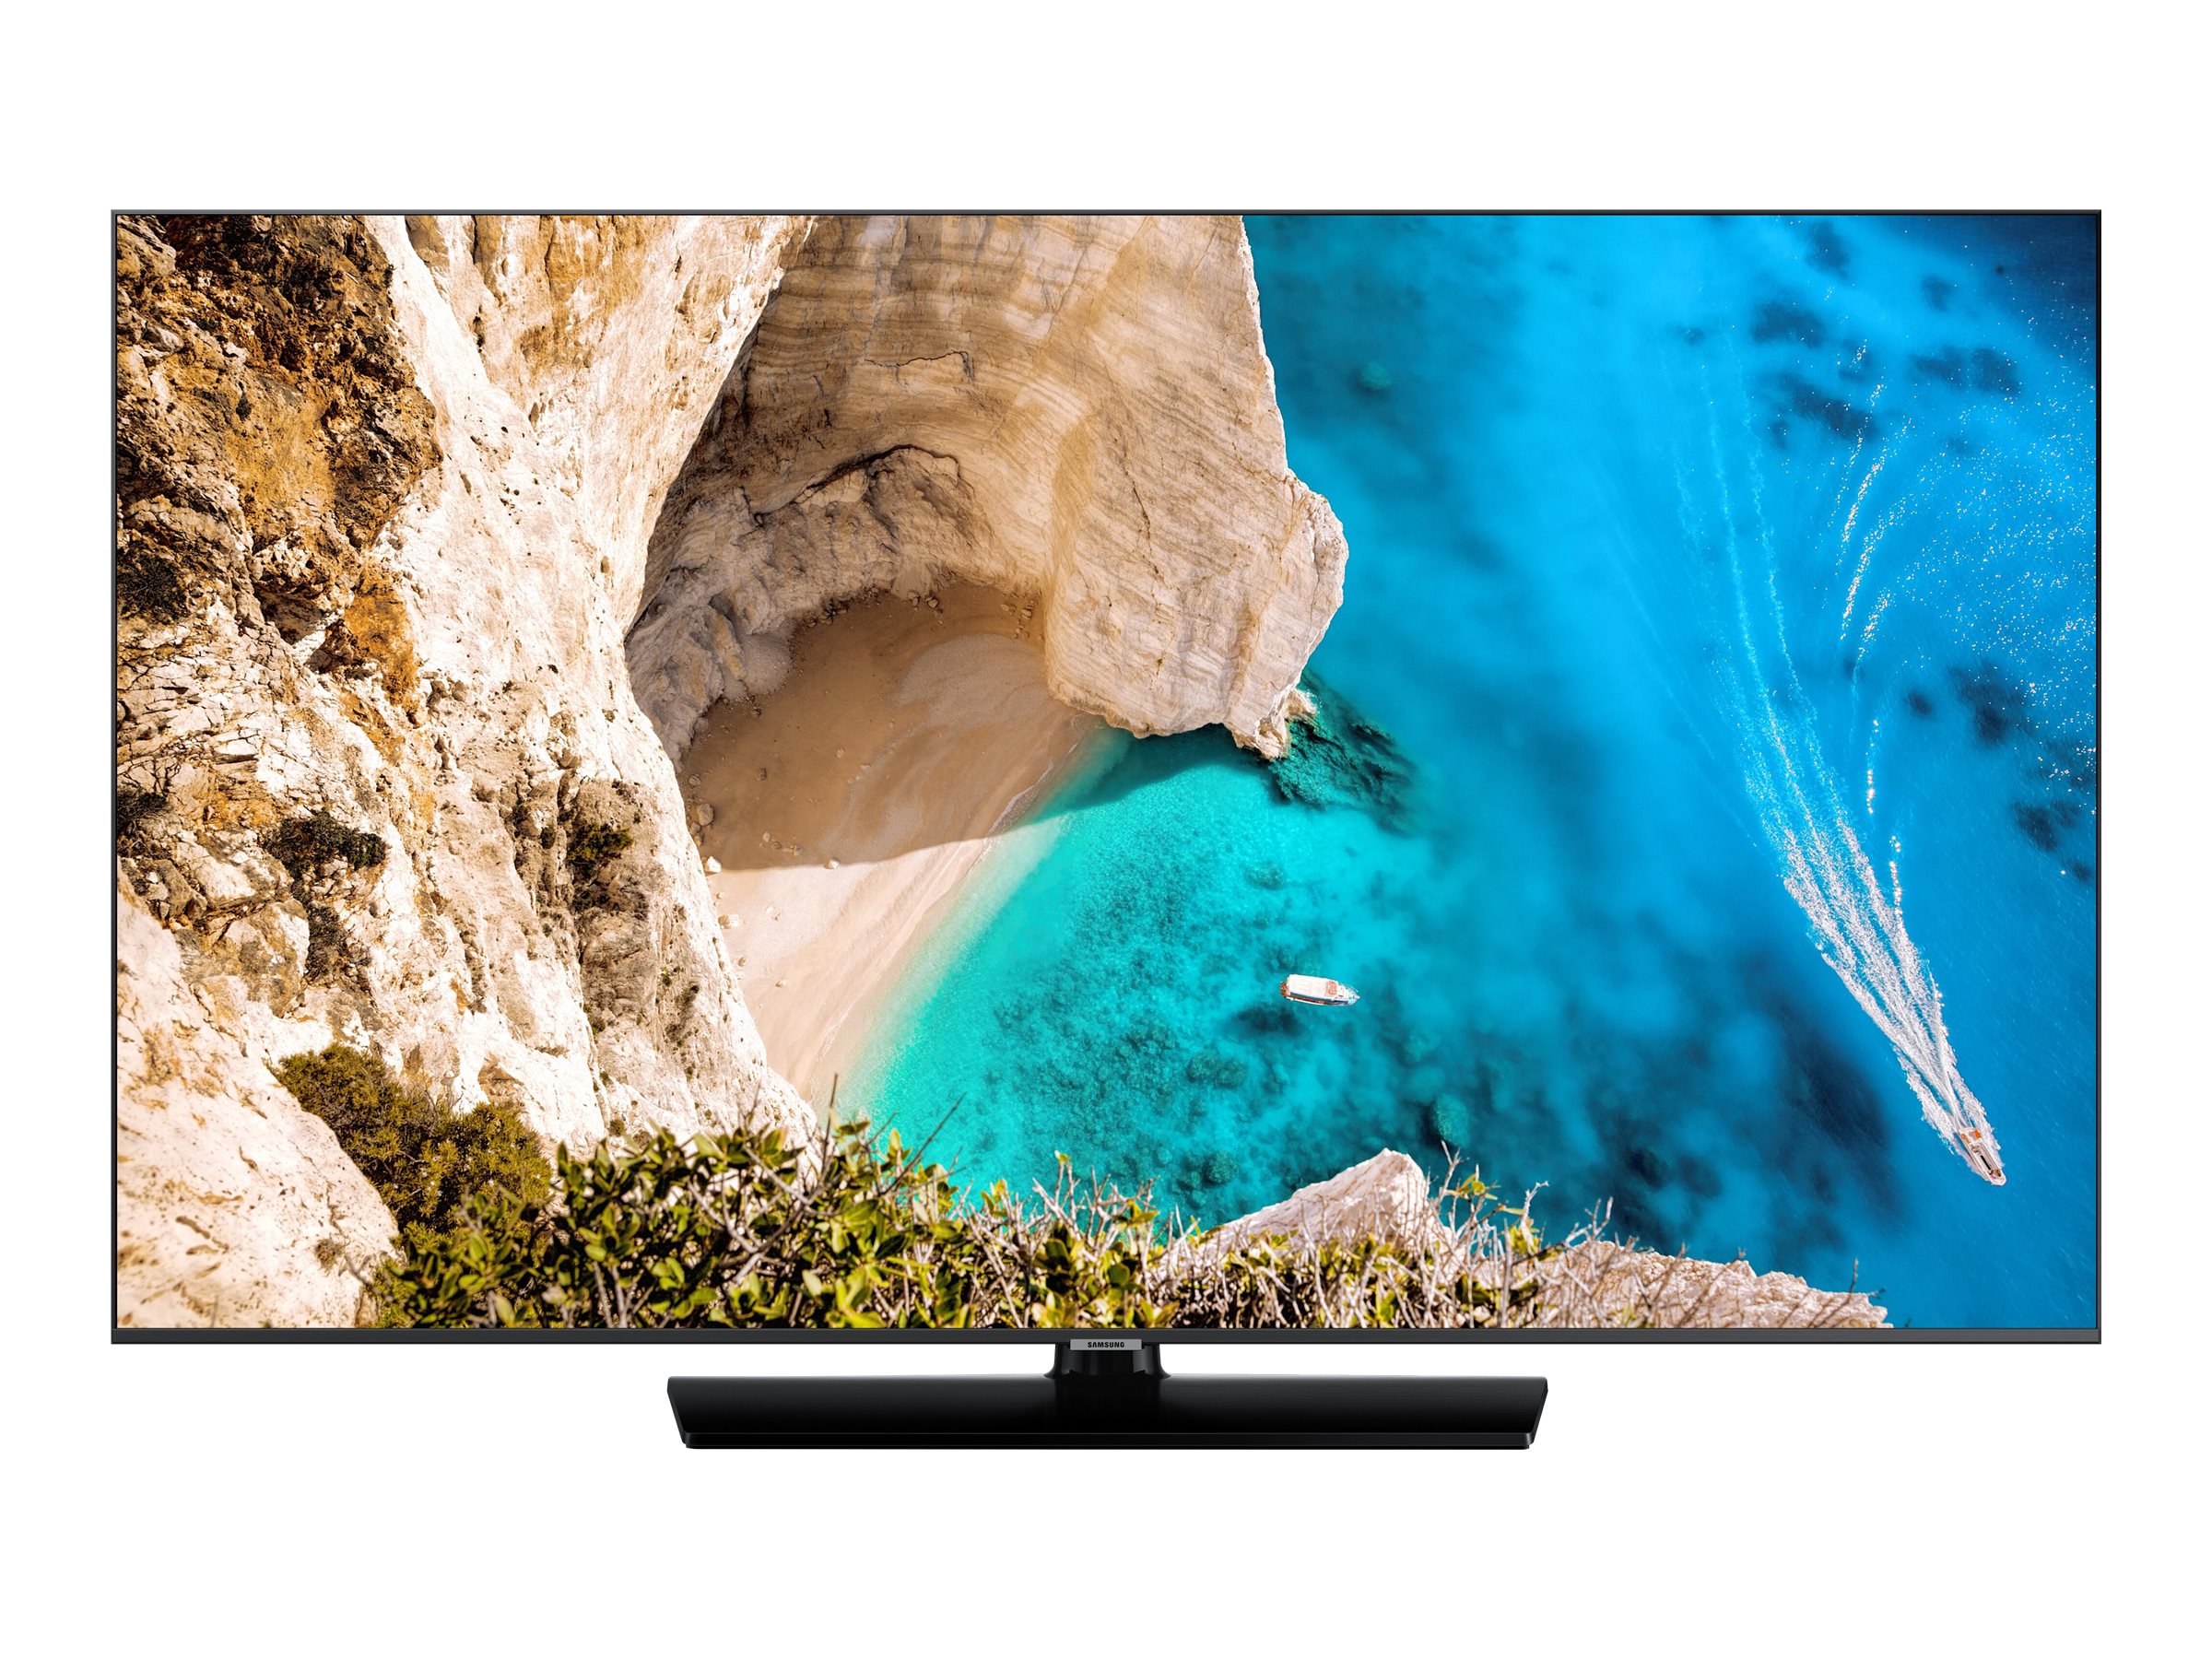 Samsung 43" Class 4K UHDTV (2160p) LED-LCD TV (HG43NT670UF) - image 1 of 4